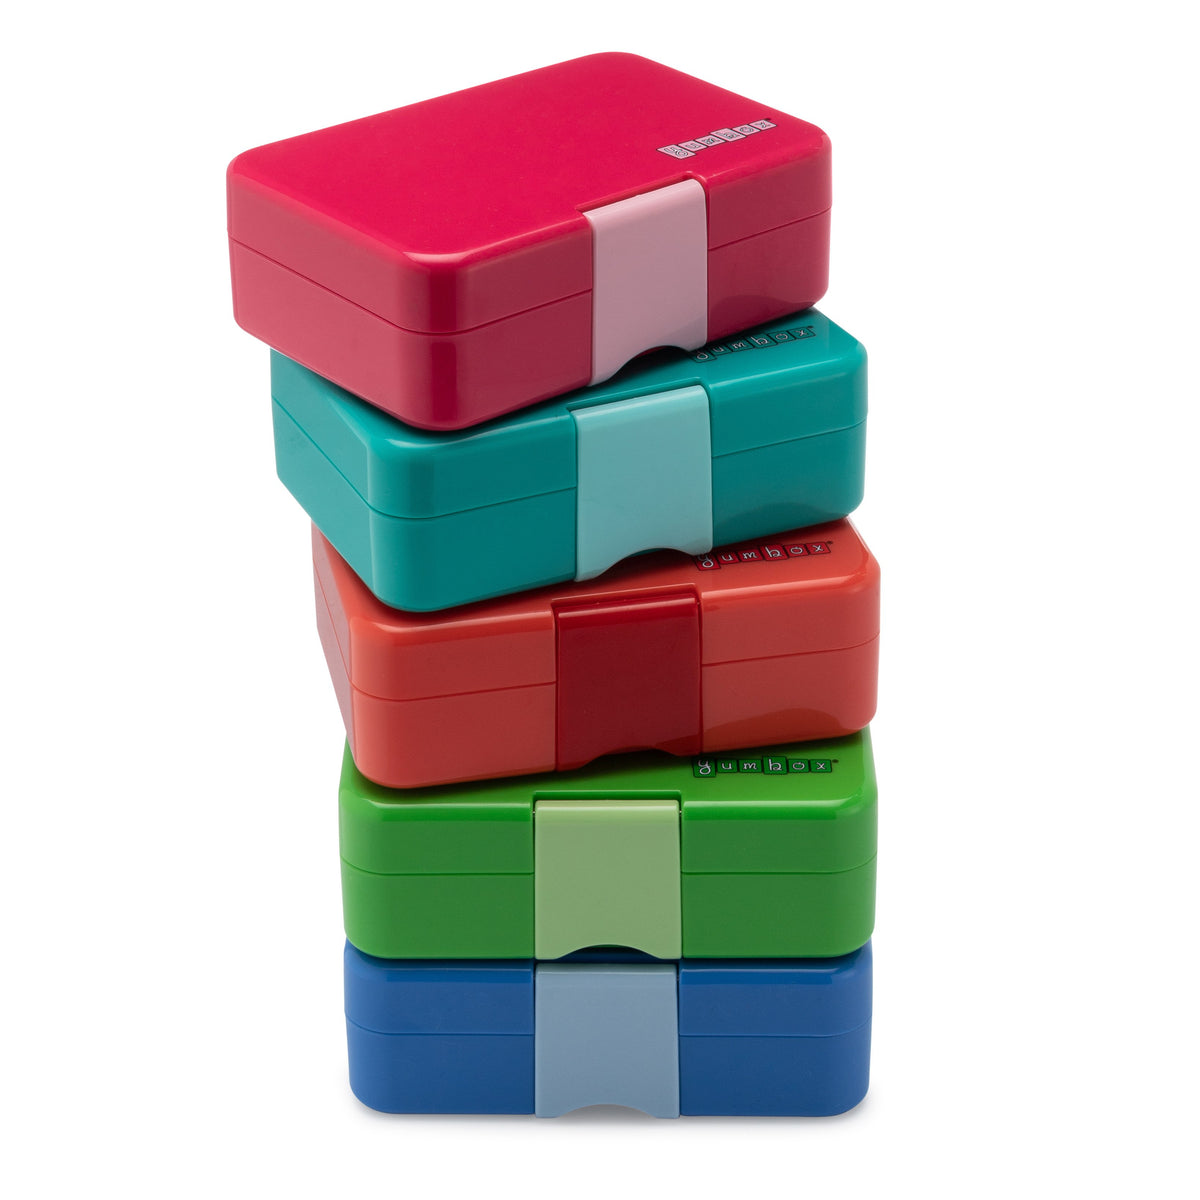 yumbox-mini-snack-kashmir-blue-3-compartment-lunch-box- (3)